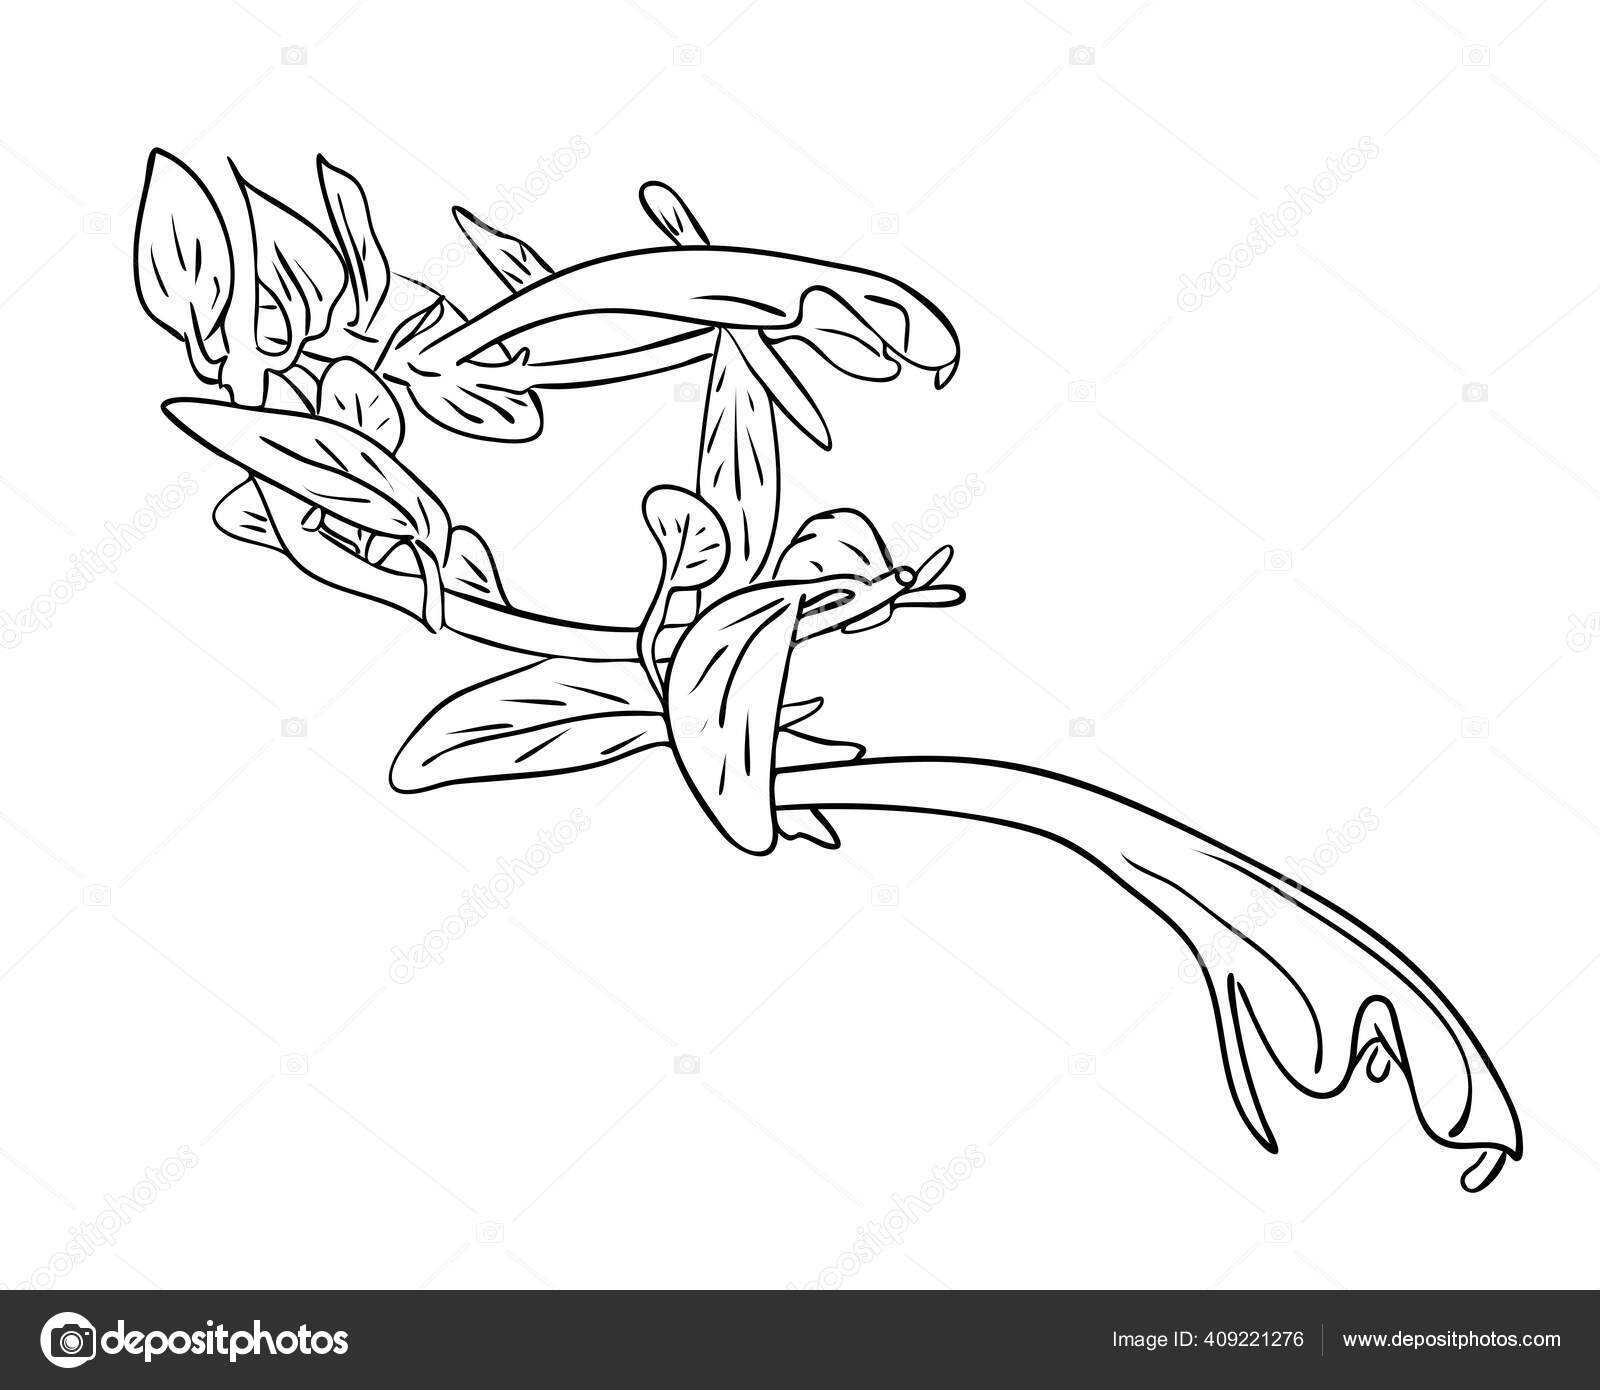 Vektor Ilustrasi Terisolasi Kolumnea Tanaman Rumah Dengan Bunga Dan Daun Stok Vektor C Tilra 409221276